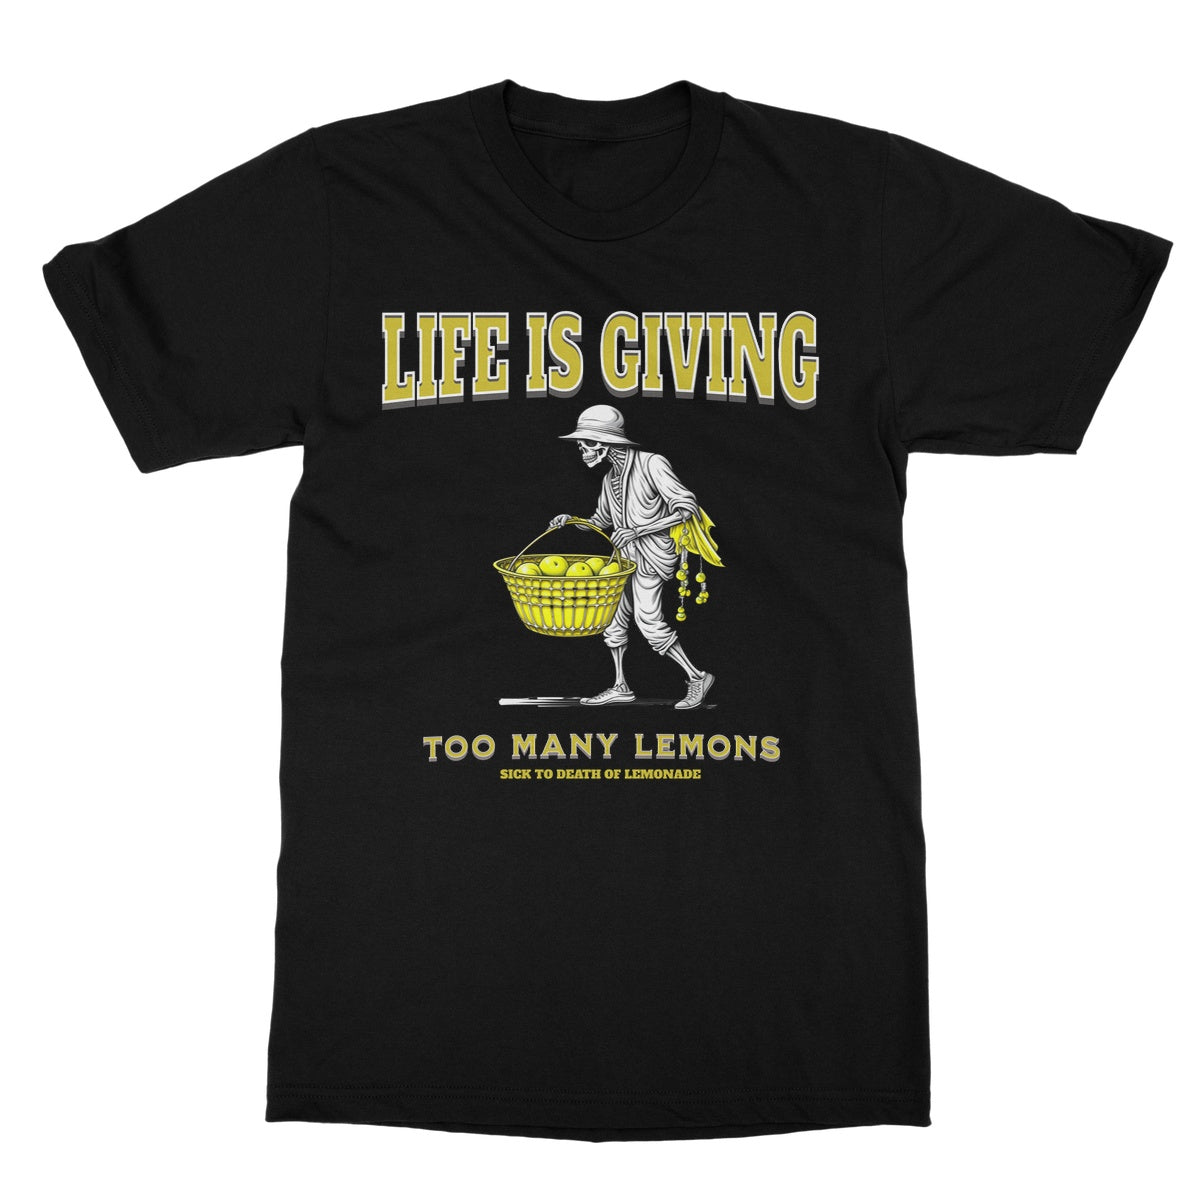 Life is giving too many lemons t shirt black